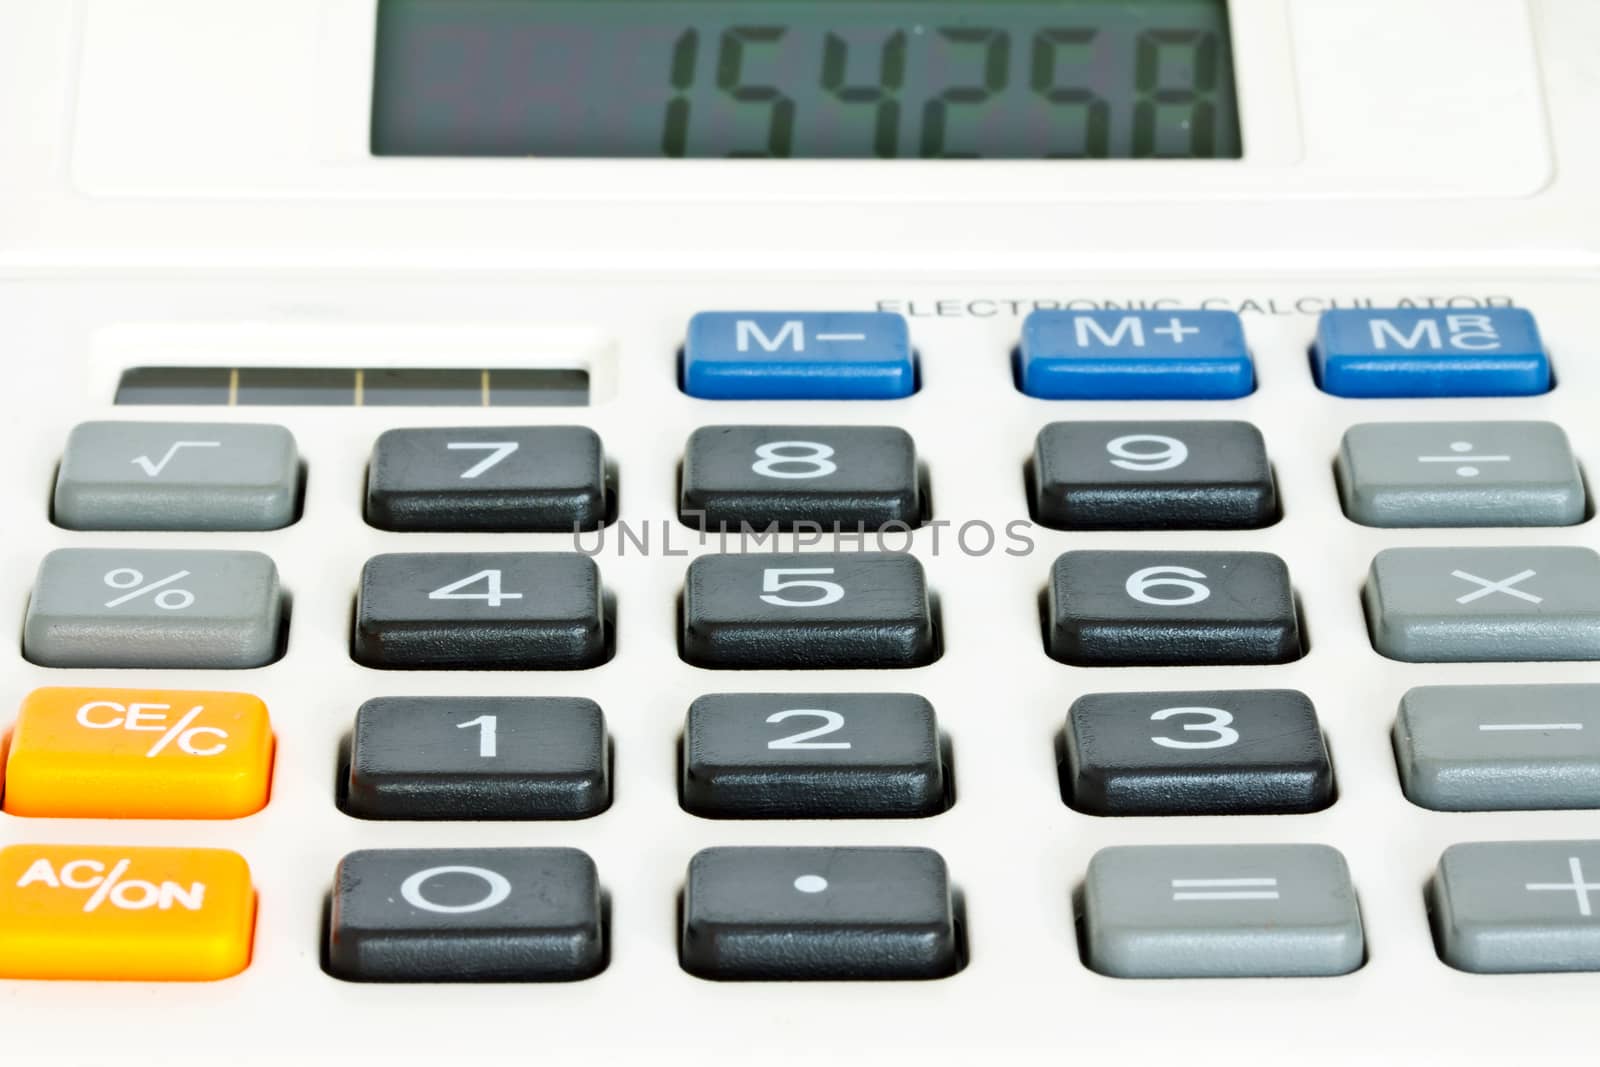 Close up Calculator Keypad 